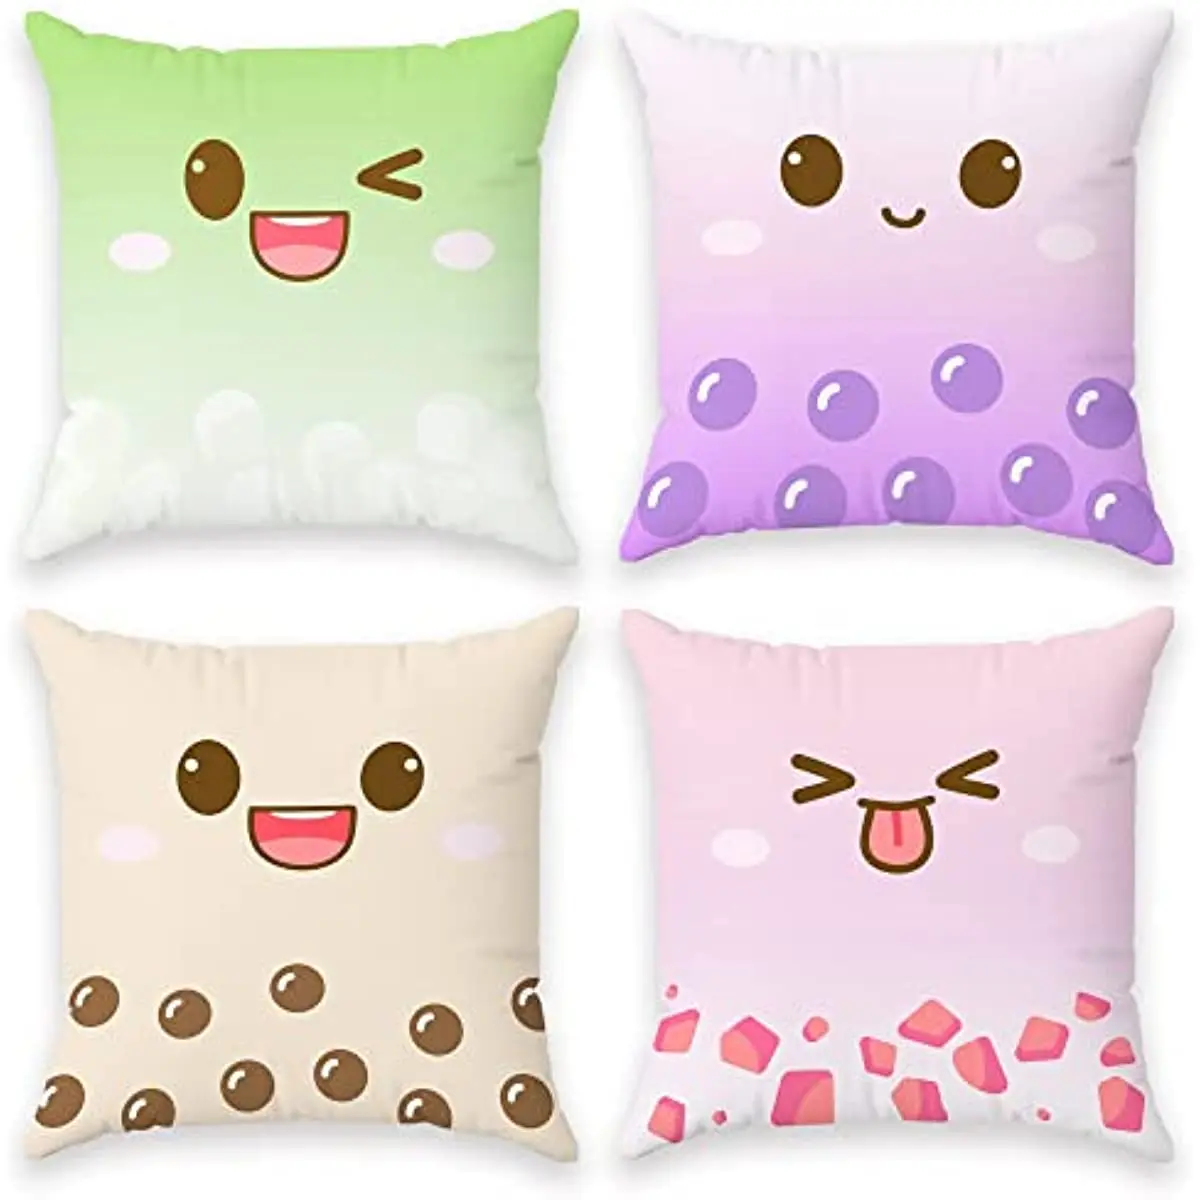 Cute Throw Pillow Cases | 4 Pack Boba Bubble Tea Anime Cartoon Chibi Faces | Kawaii Decorative Living Room Decor Set for Girls